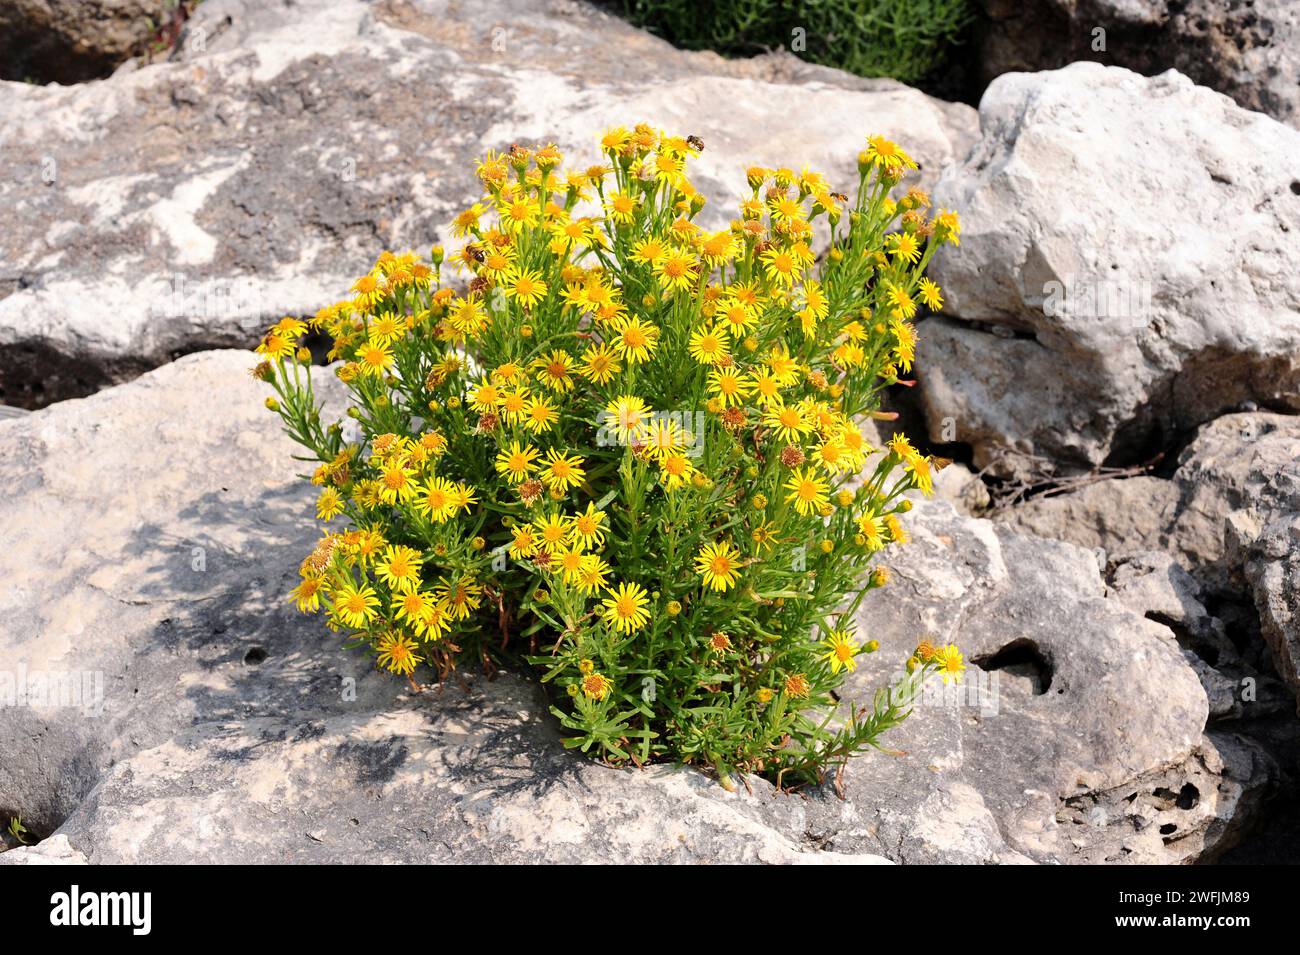 Golden samphire (Inula crithmoides or Limbarda crithmoides) is a perennial herb native to coasts of Mediterranean Basin and atlantic European coasts f Stock Photo